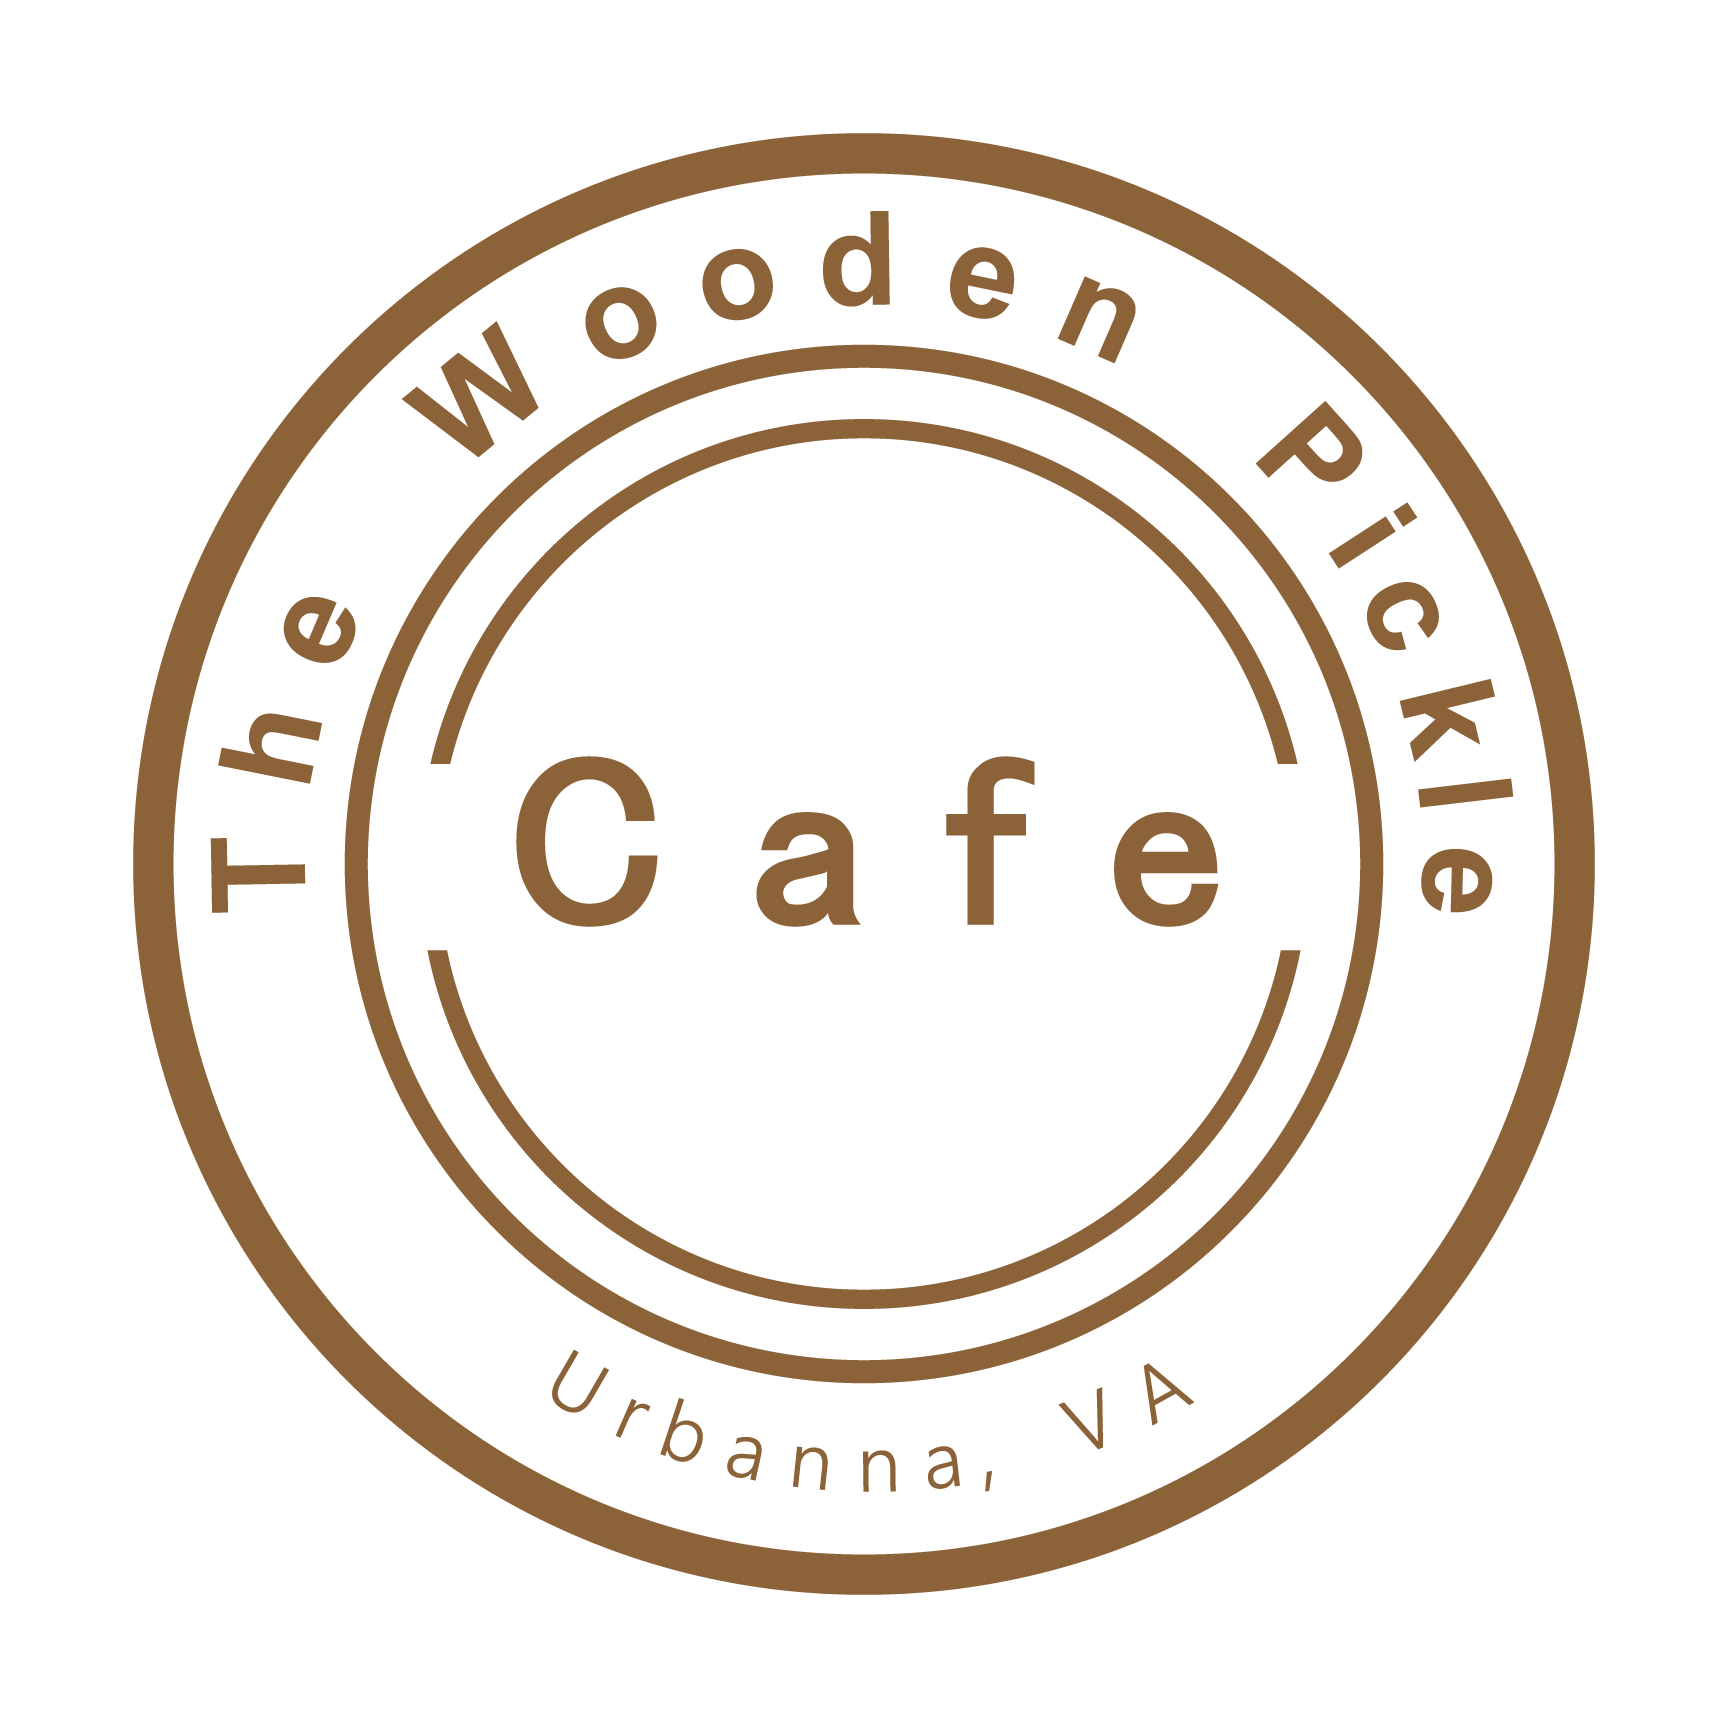 The Wooden Pickle Cafe Urbanna VA